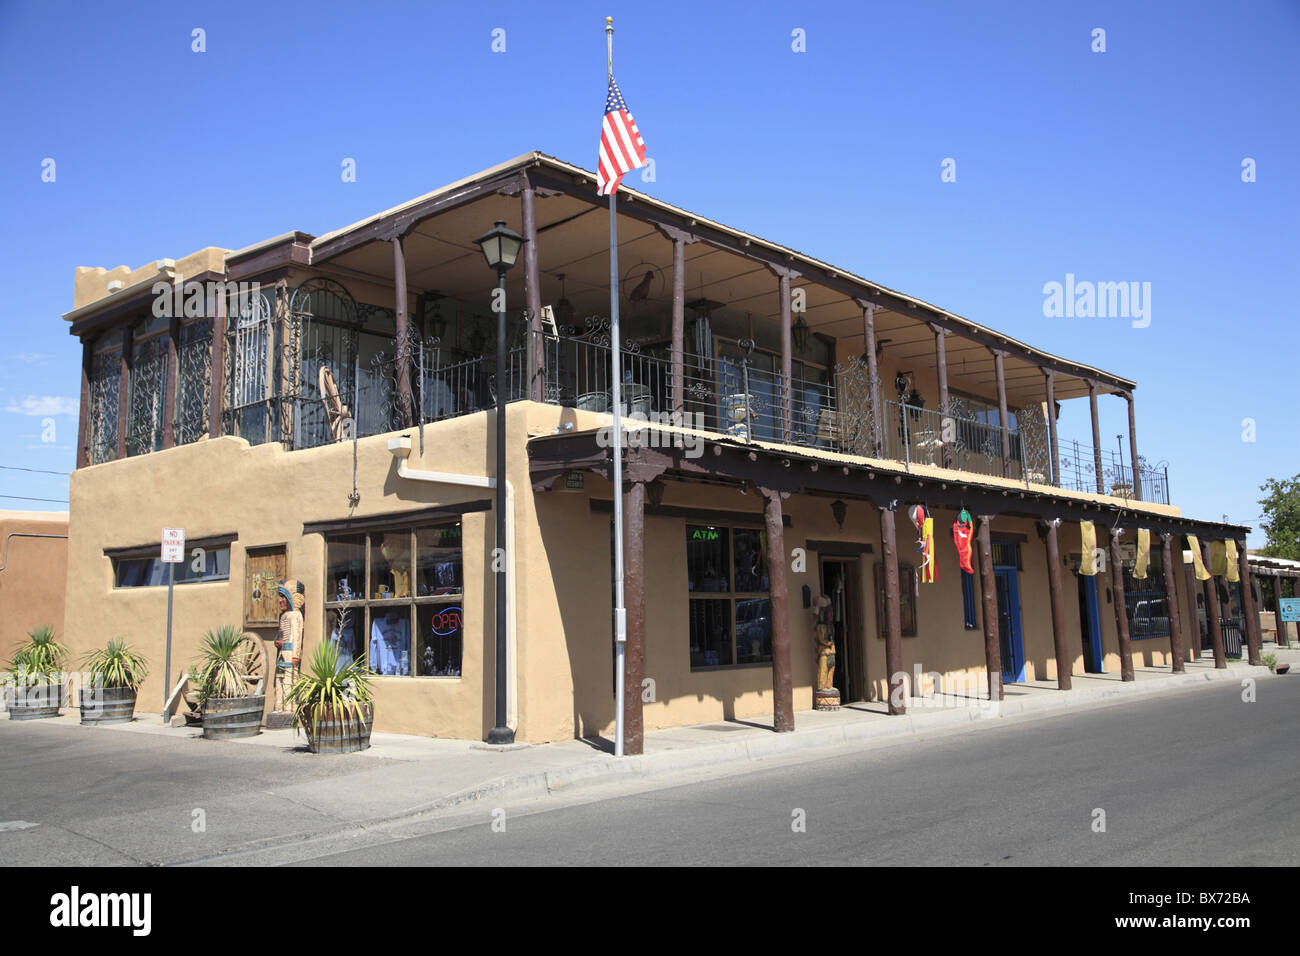 Arquitectura de adobe, Old Town, Albuquerque, Nuevo México, Estados Unidos de América, América del Norte Foto de stock